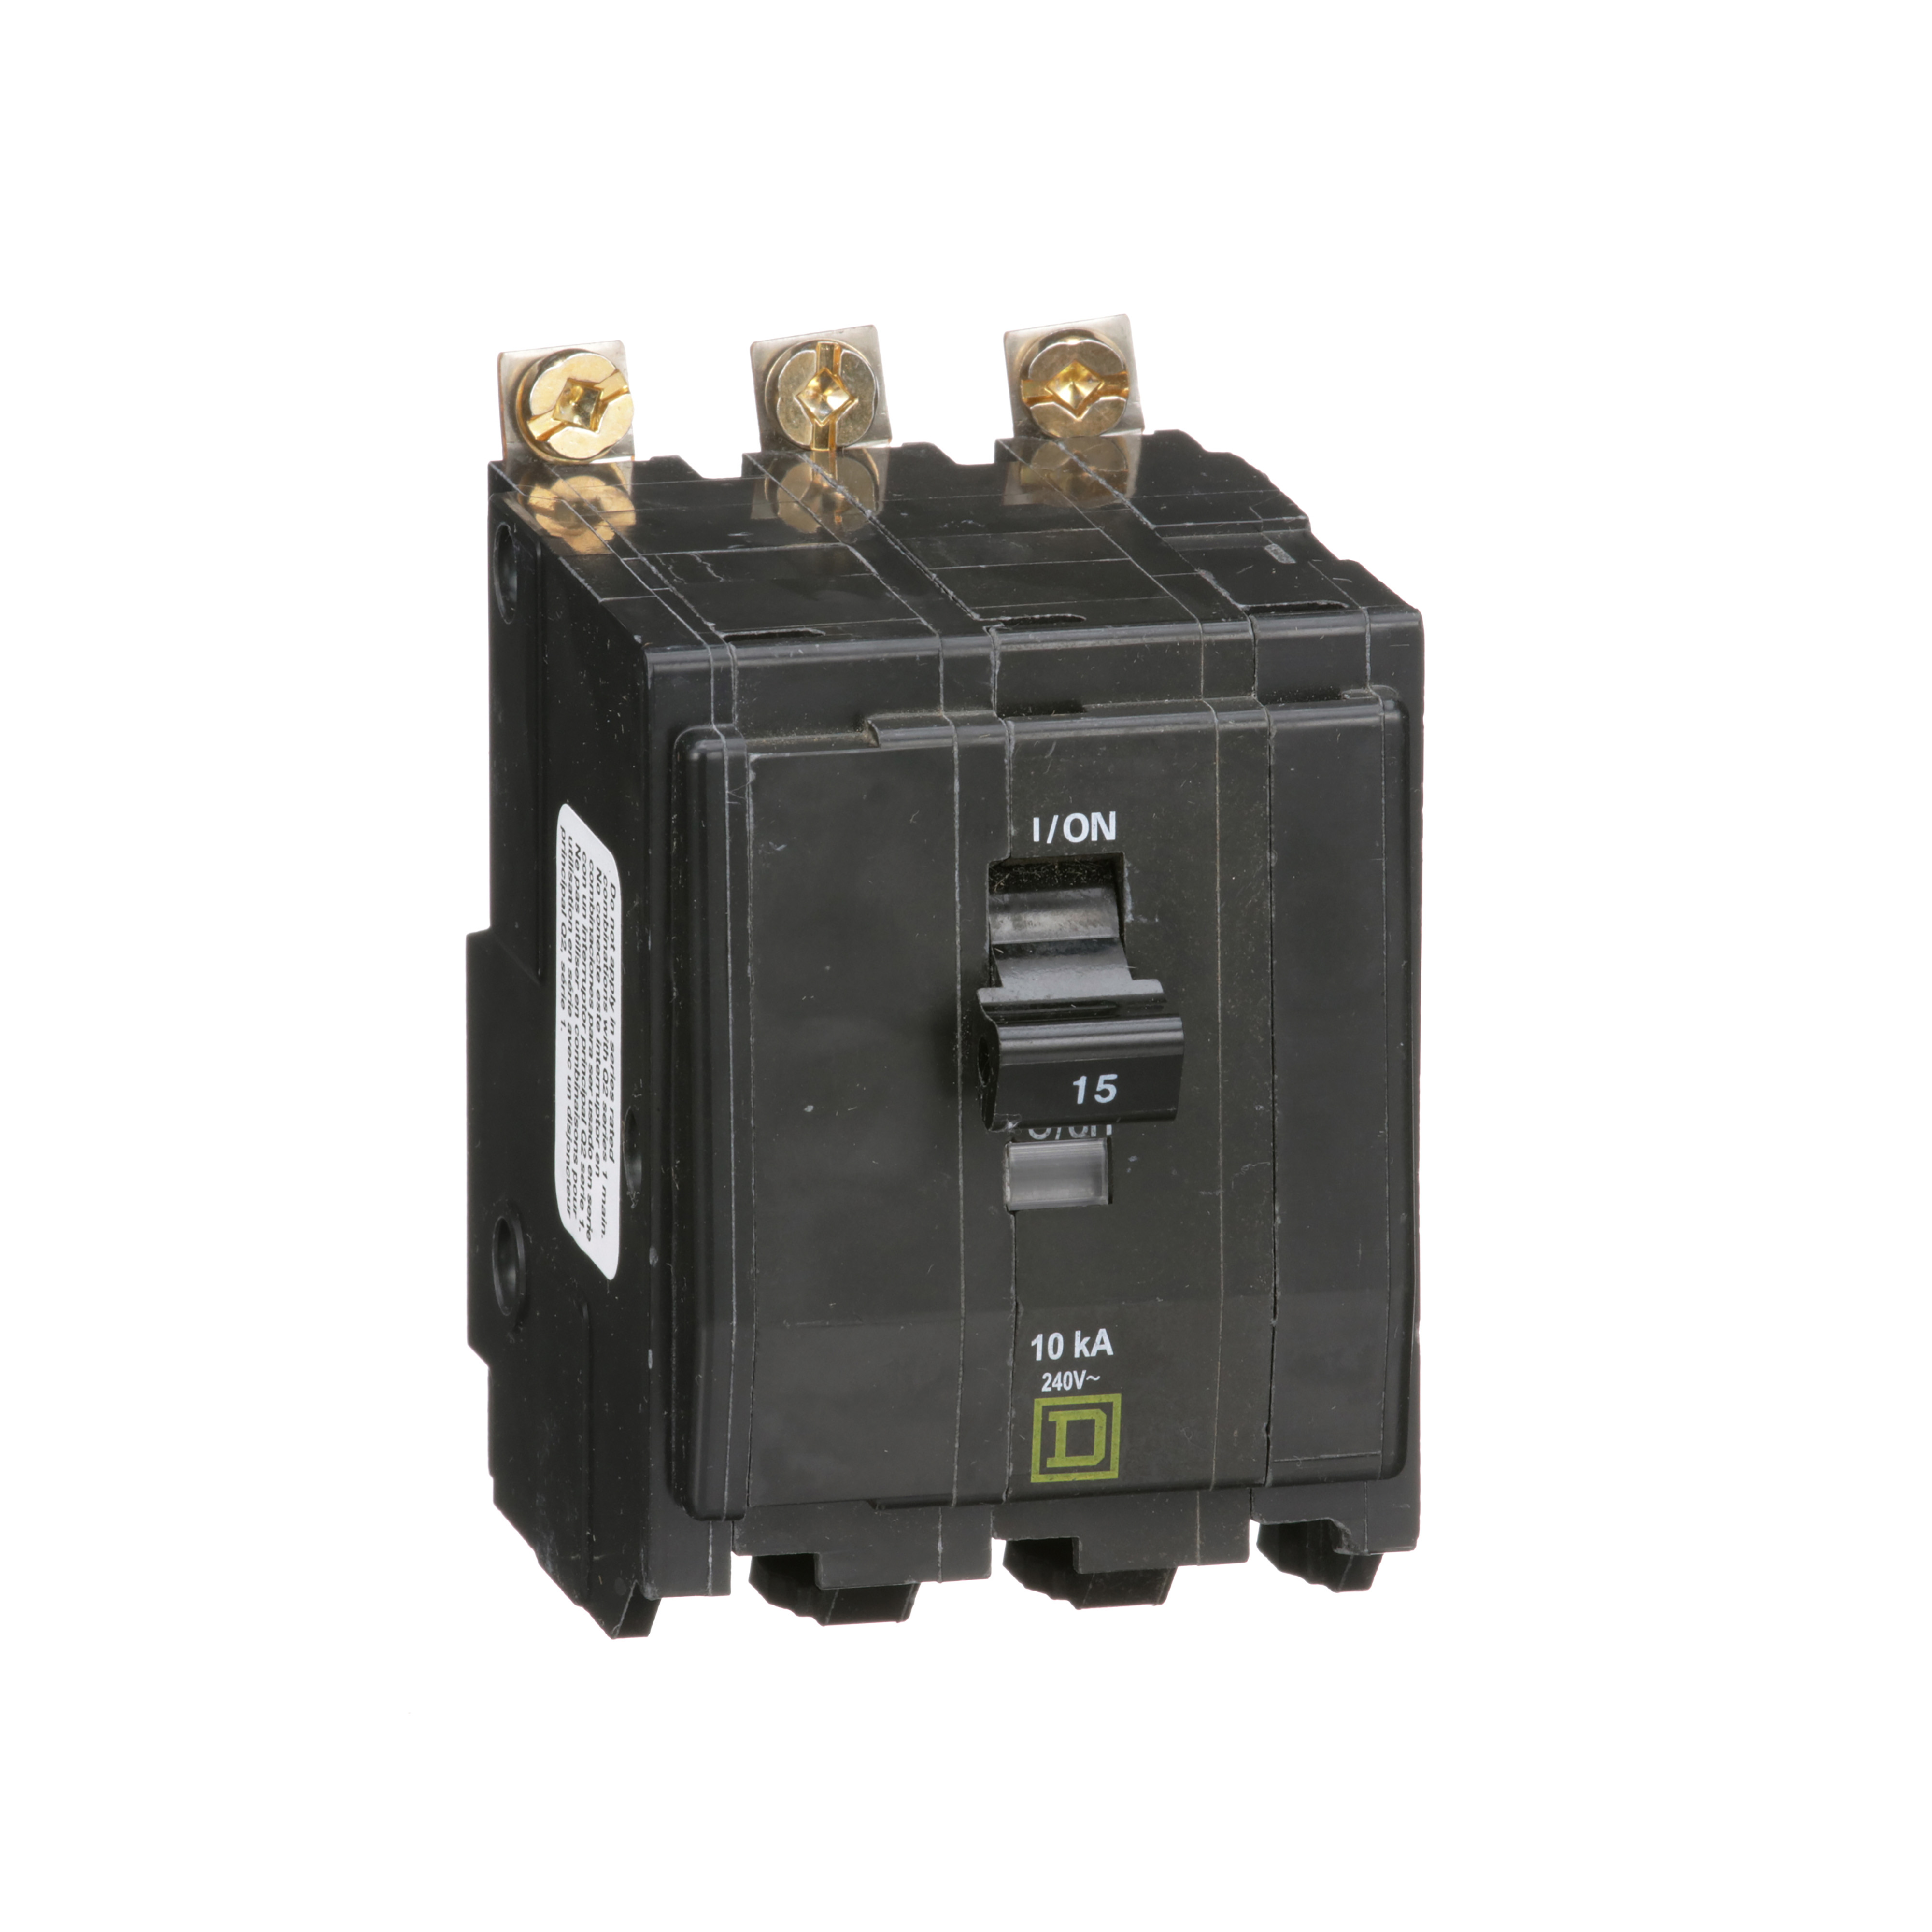 Mini circuit breaker, QO, 15A, 3 pole, 120/240VAC, 10kA, bolt on